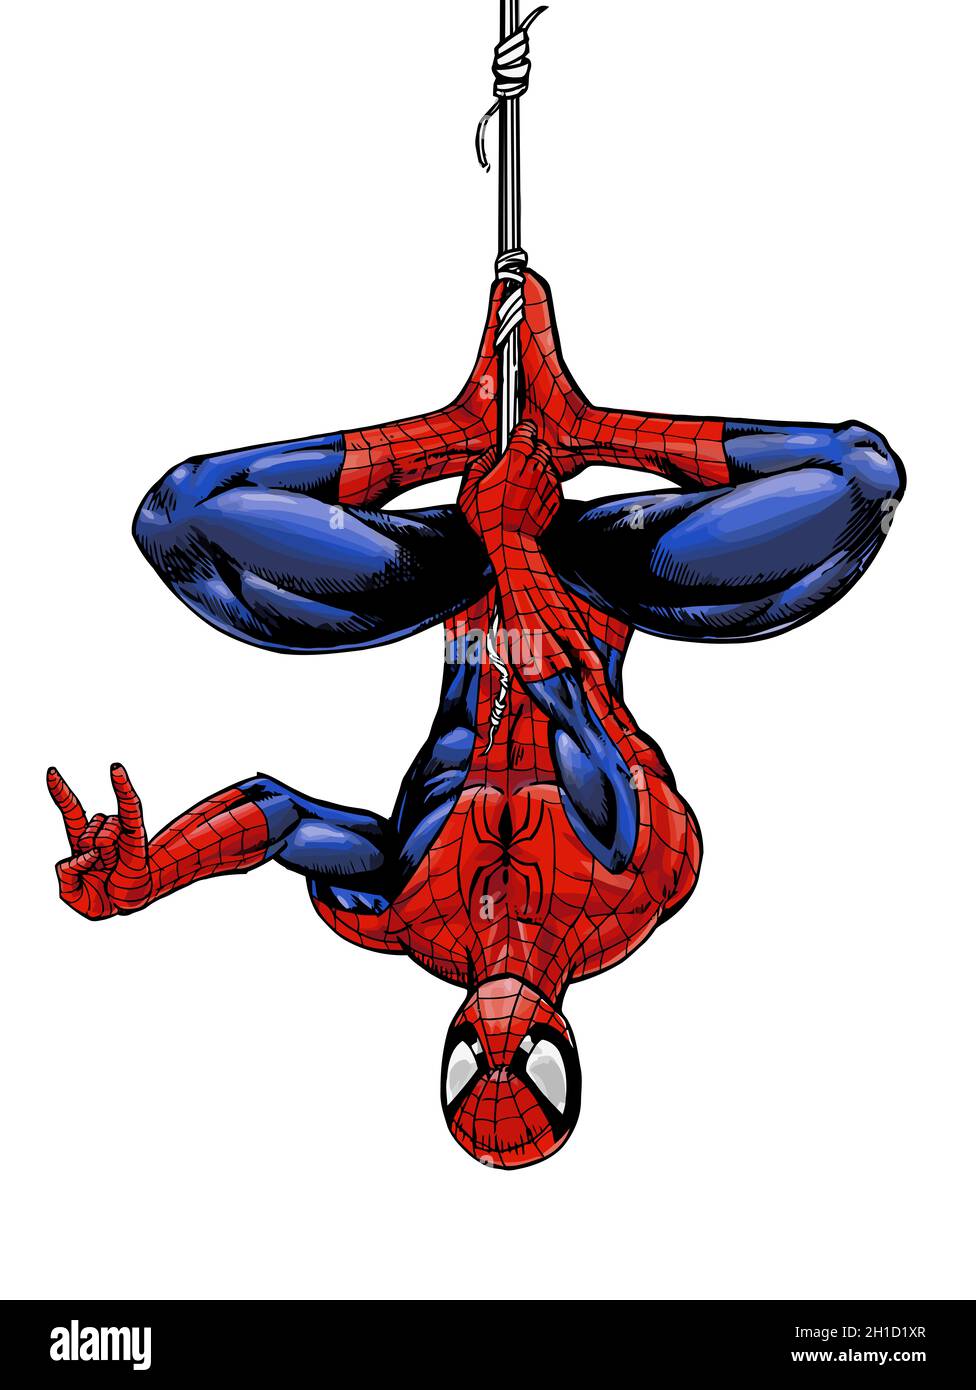 spiderman power hero illustration upside down editorial Stock Photo